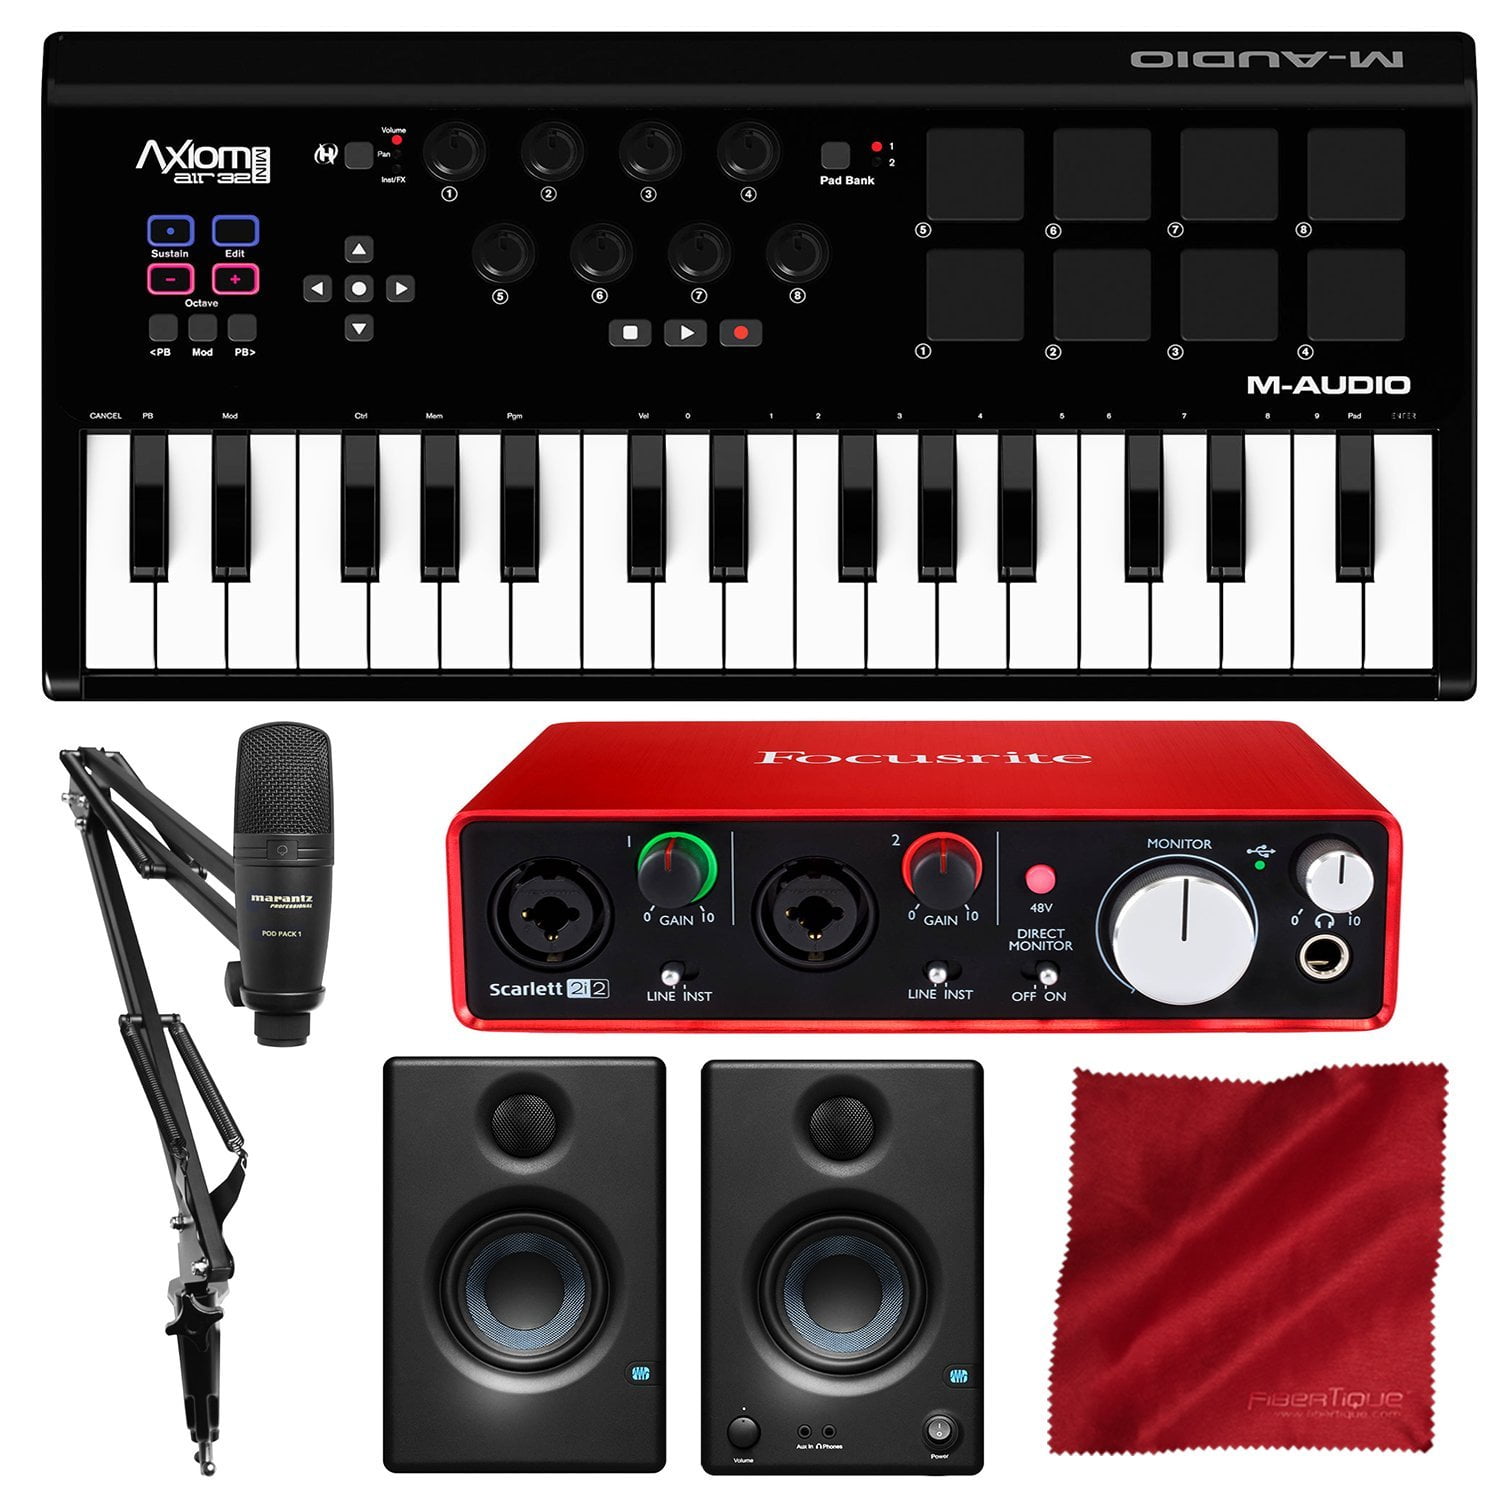 Axiom AIR Mini 32 USB MIDI Keyboard with Focusrite Scarlett 2i2 USB Audio Marantz Pod Pack 1 Microphone Kit, and Premium Bundle - Walmart.com